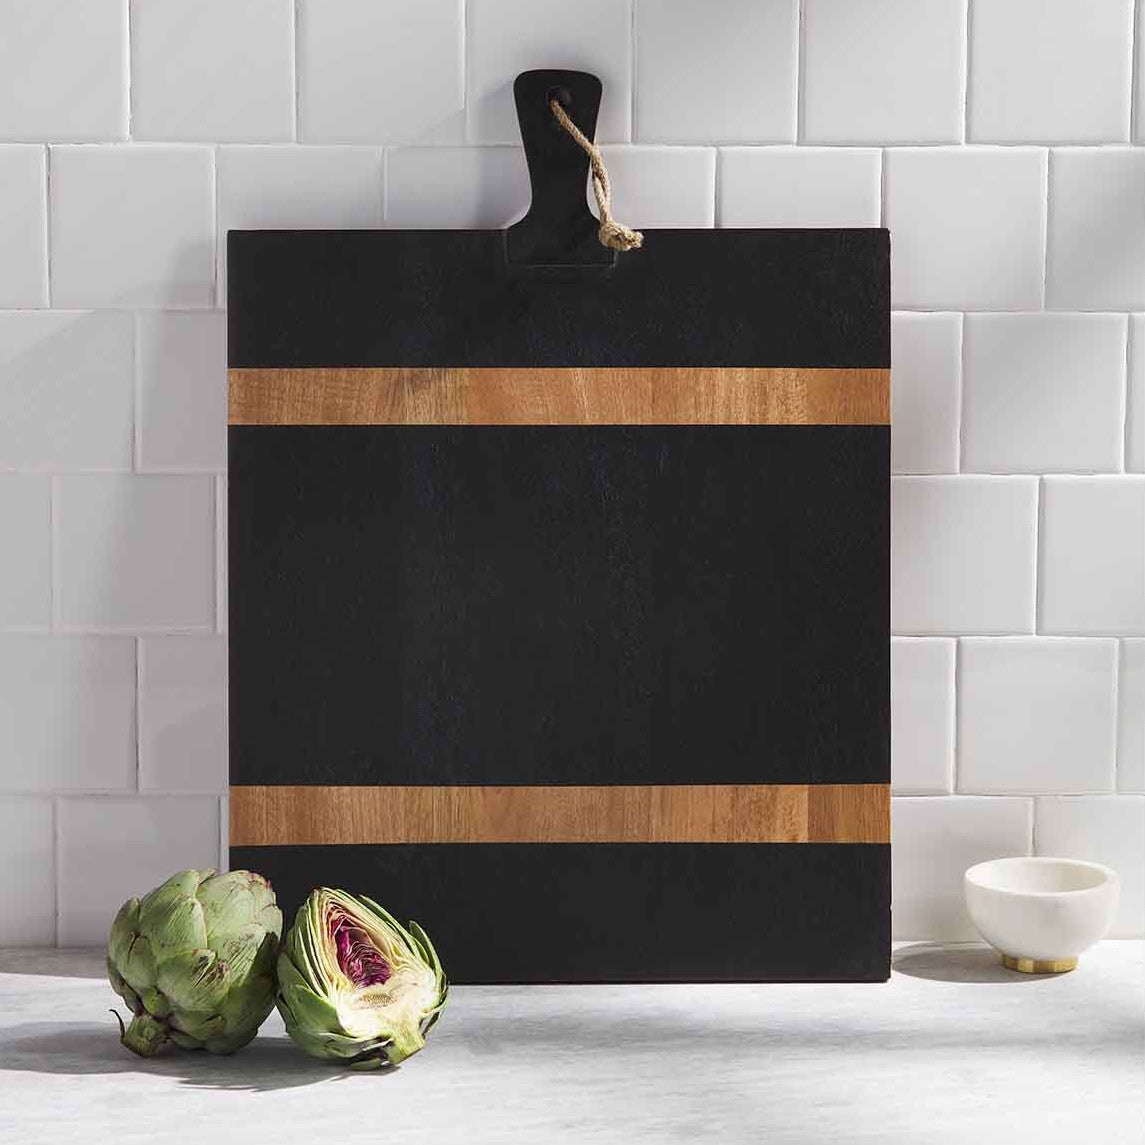 Personalized Black Wood Paddle Board w/Stripes